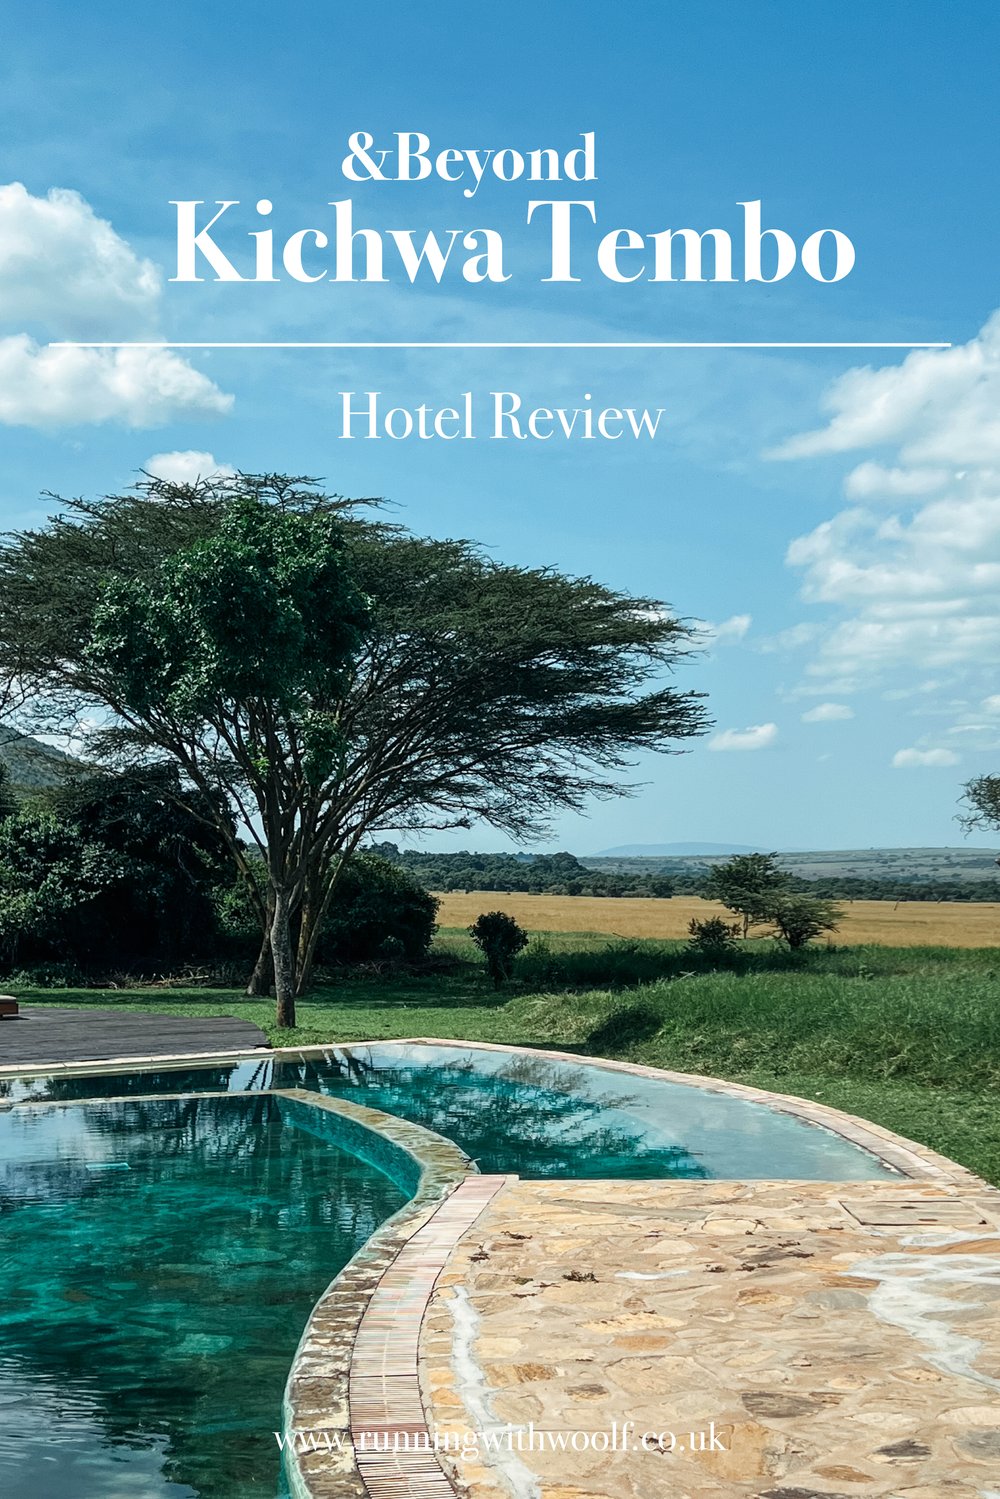 Hotel Review Kichwa Tembo rEVIEW pIN 3.jpg